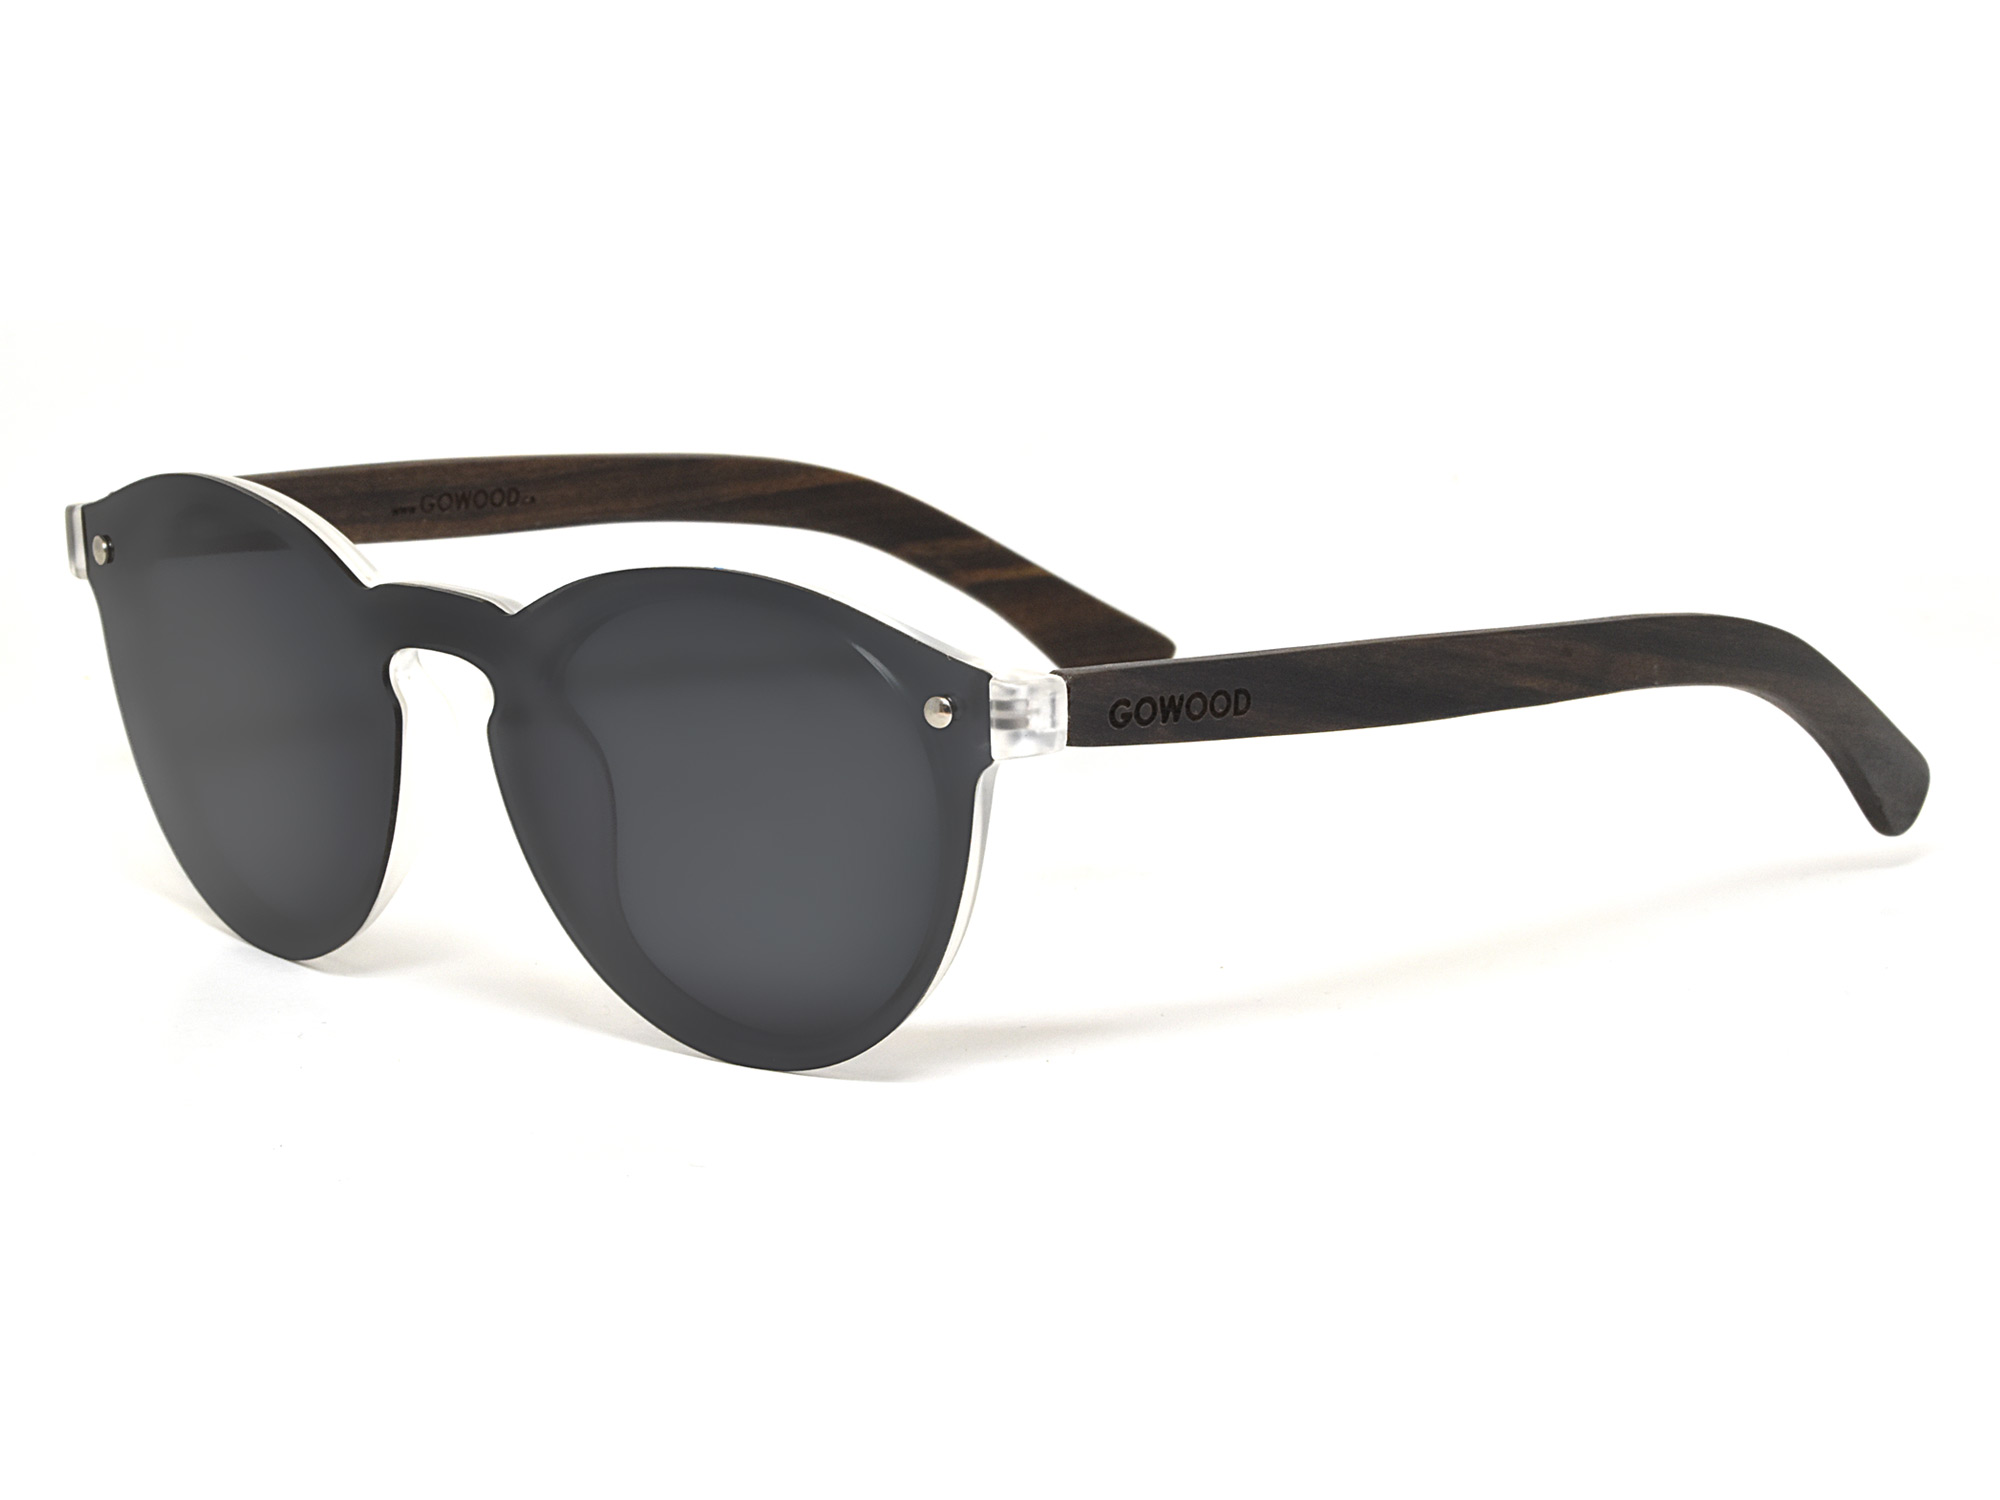 Round ebony wood sunglasses with dark grey polarized lens